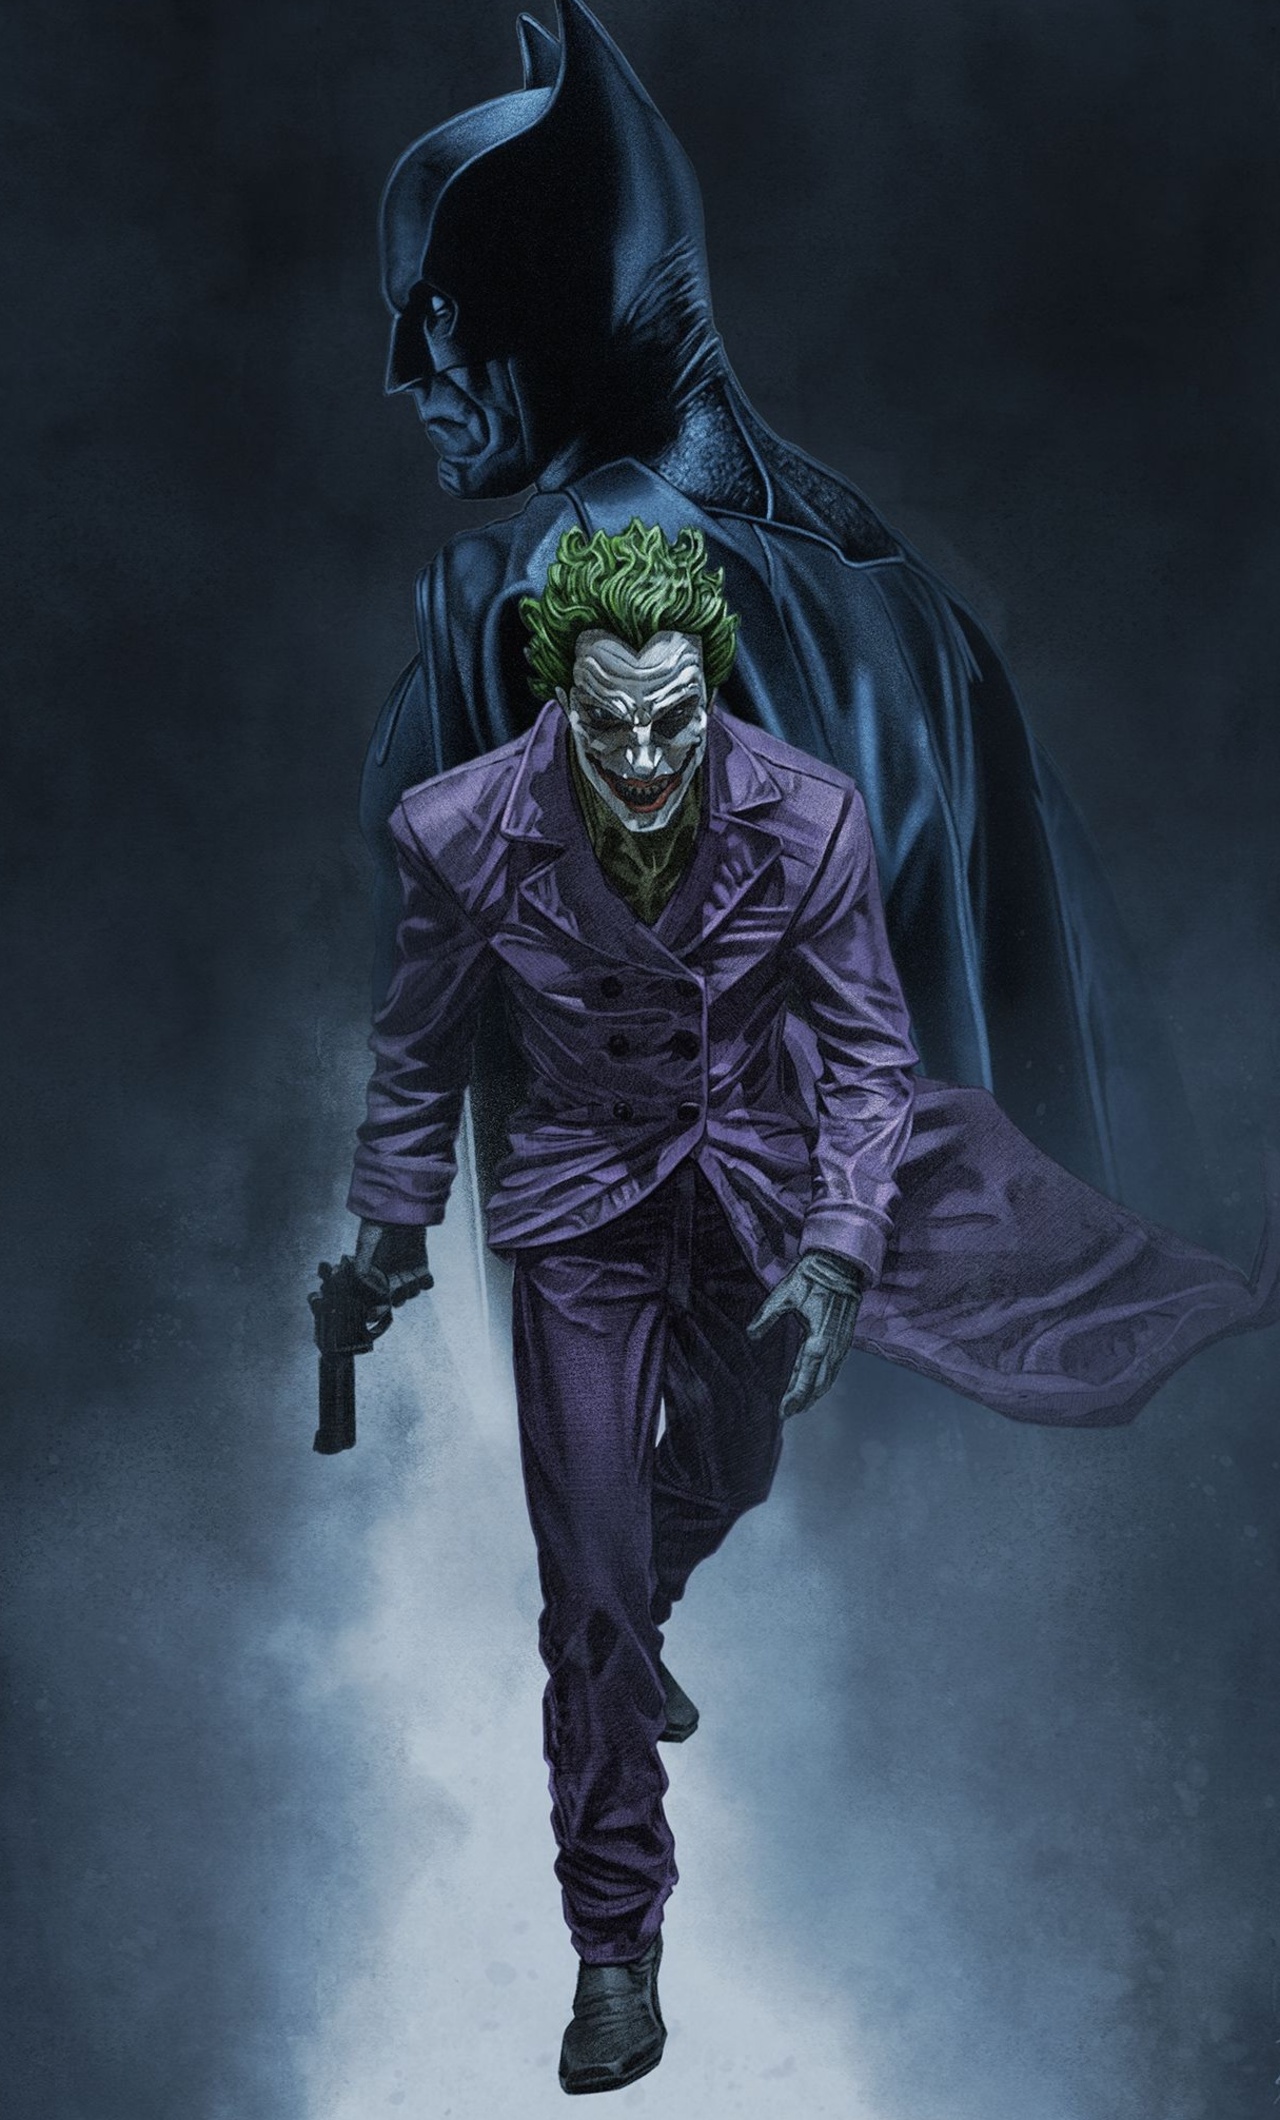 Bat Man VS Joker Wallpaper ( See Description) by moviefan22 on DeviantArt